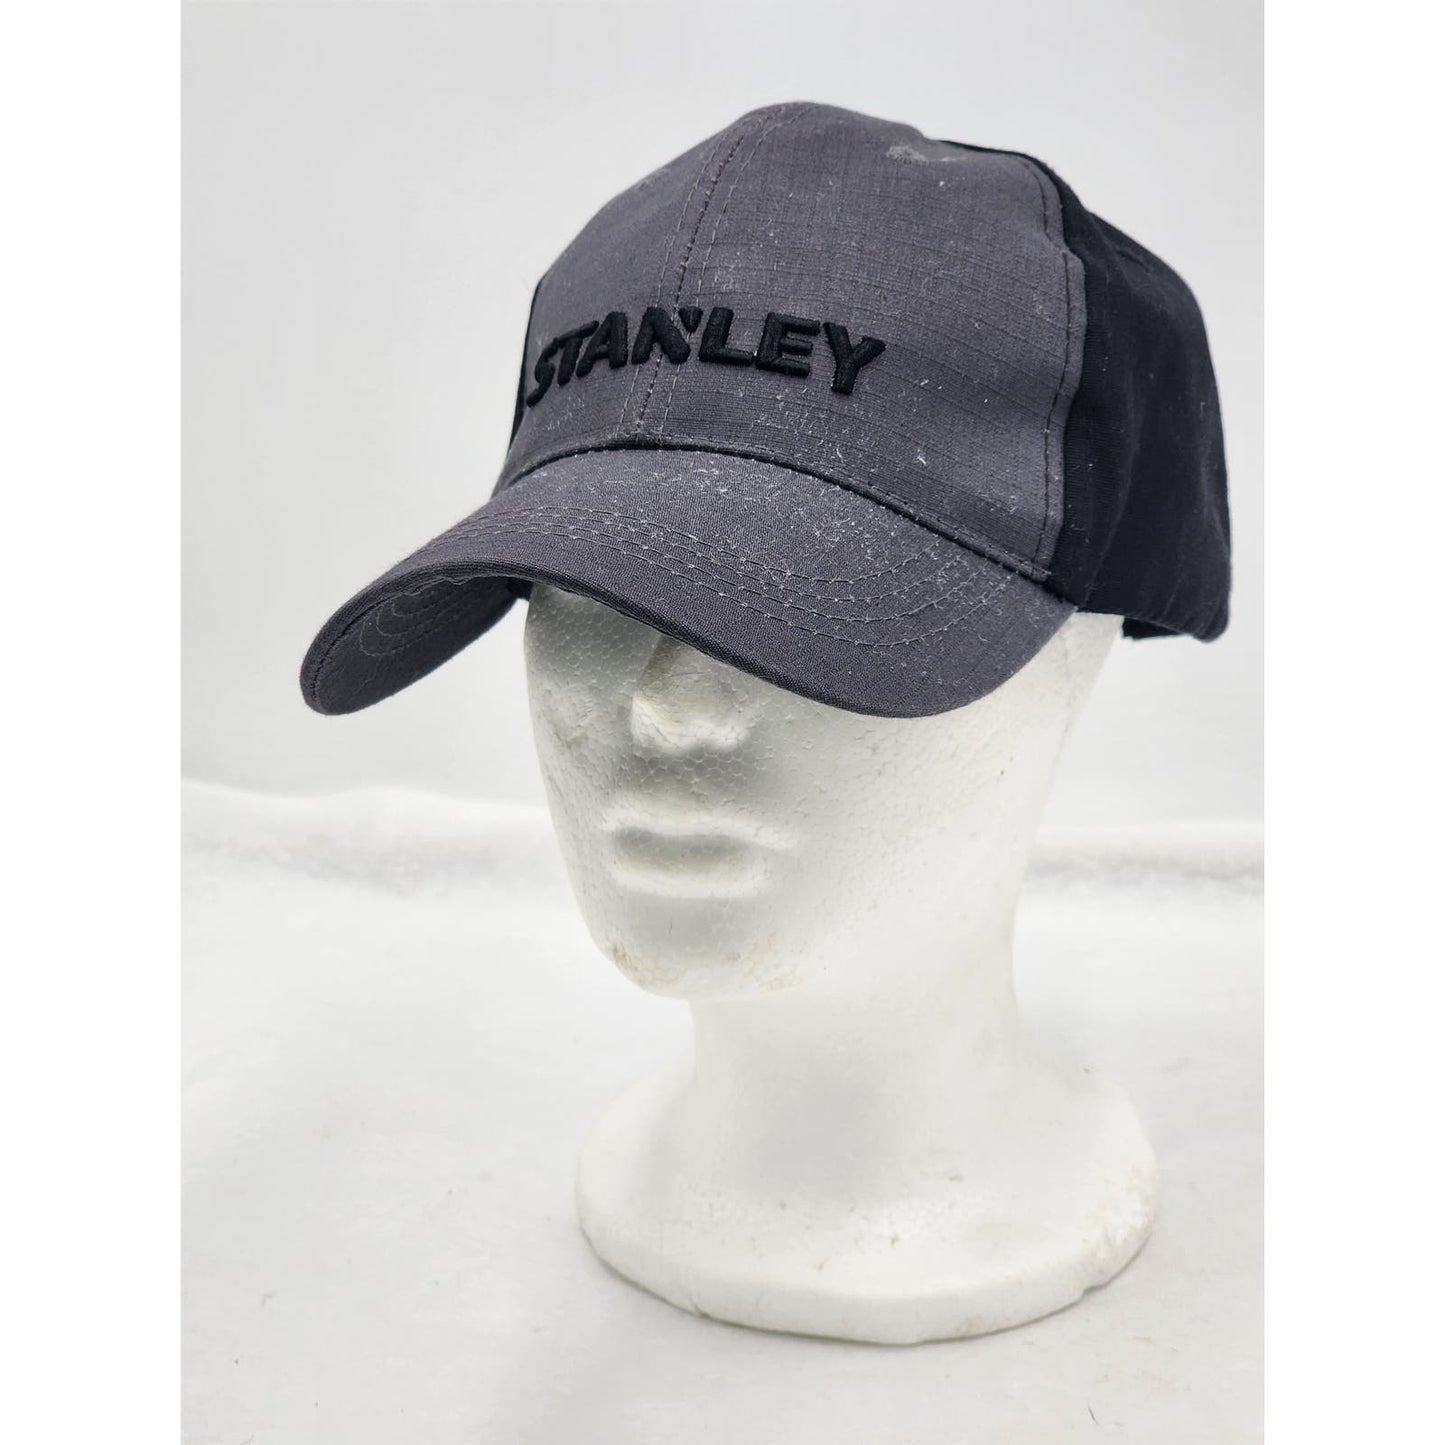 Stanley Tools Hat Black Baseball Cap Snapback Curved Brim